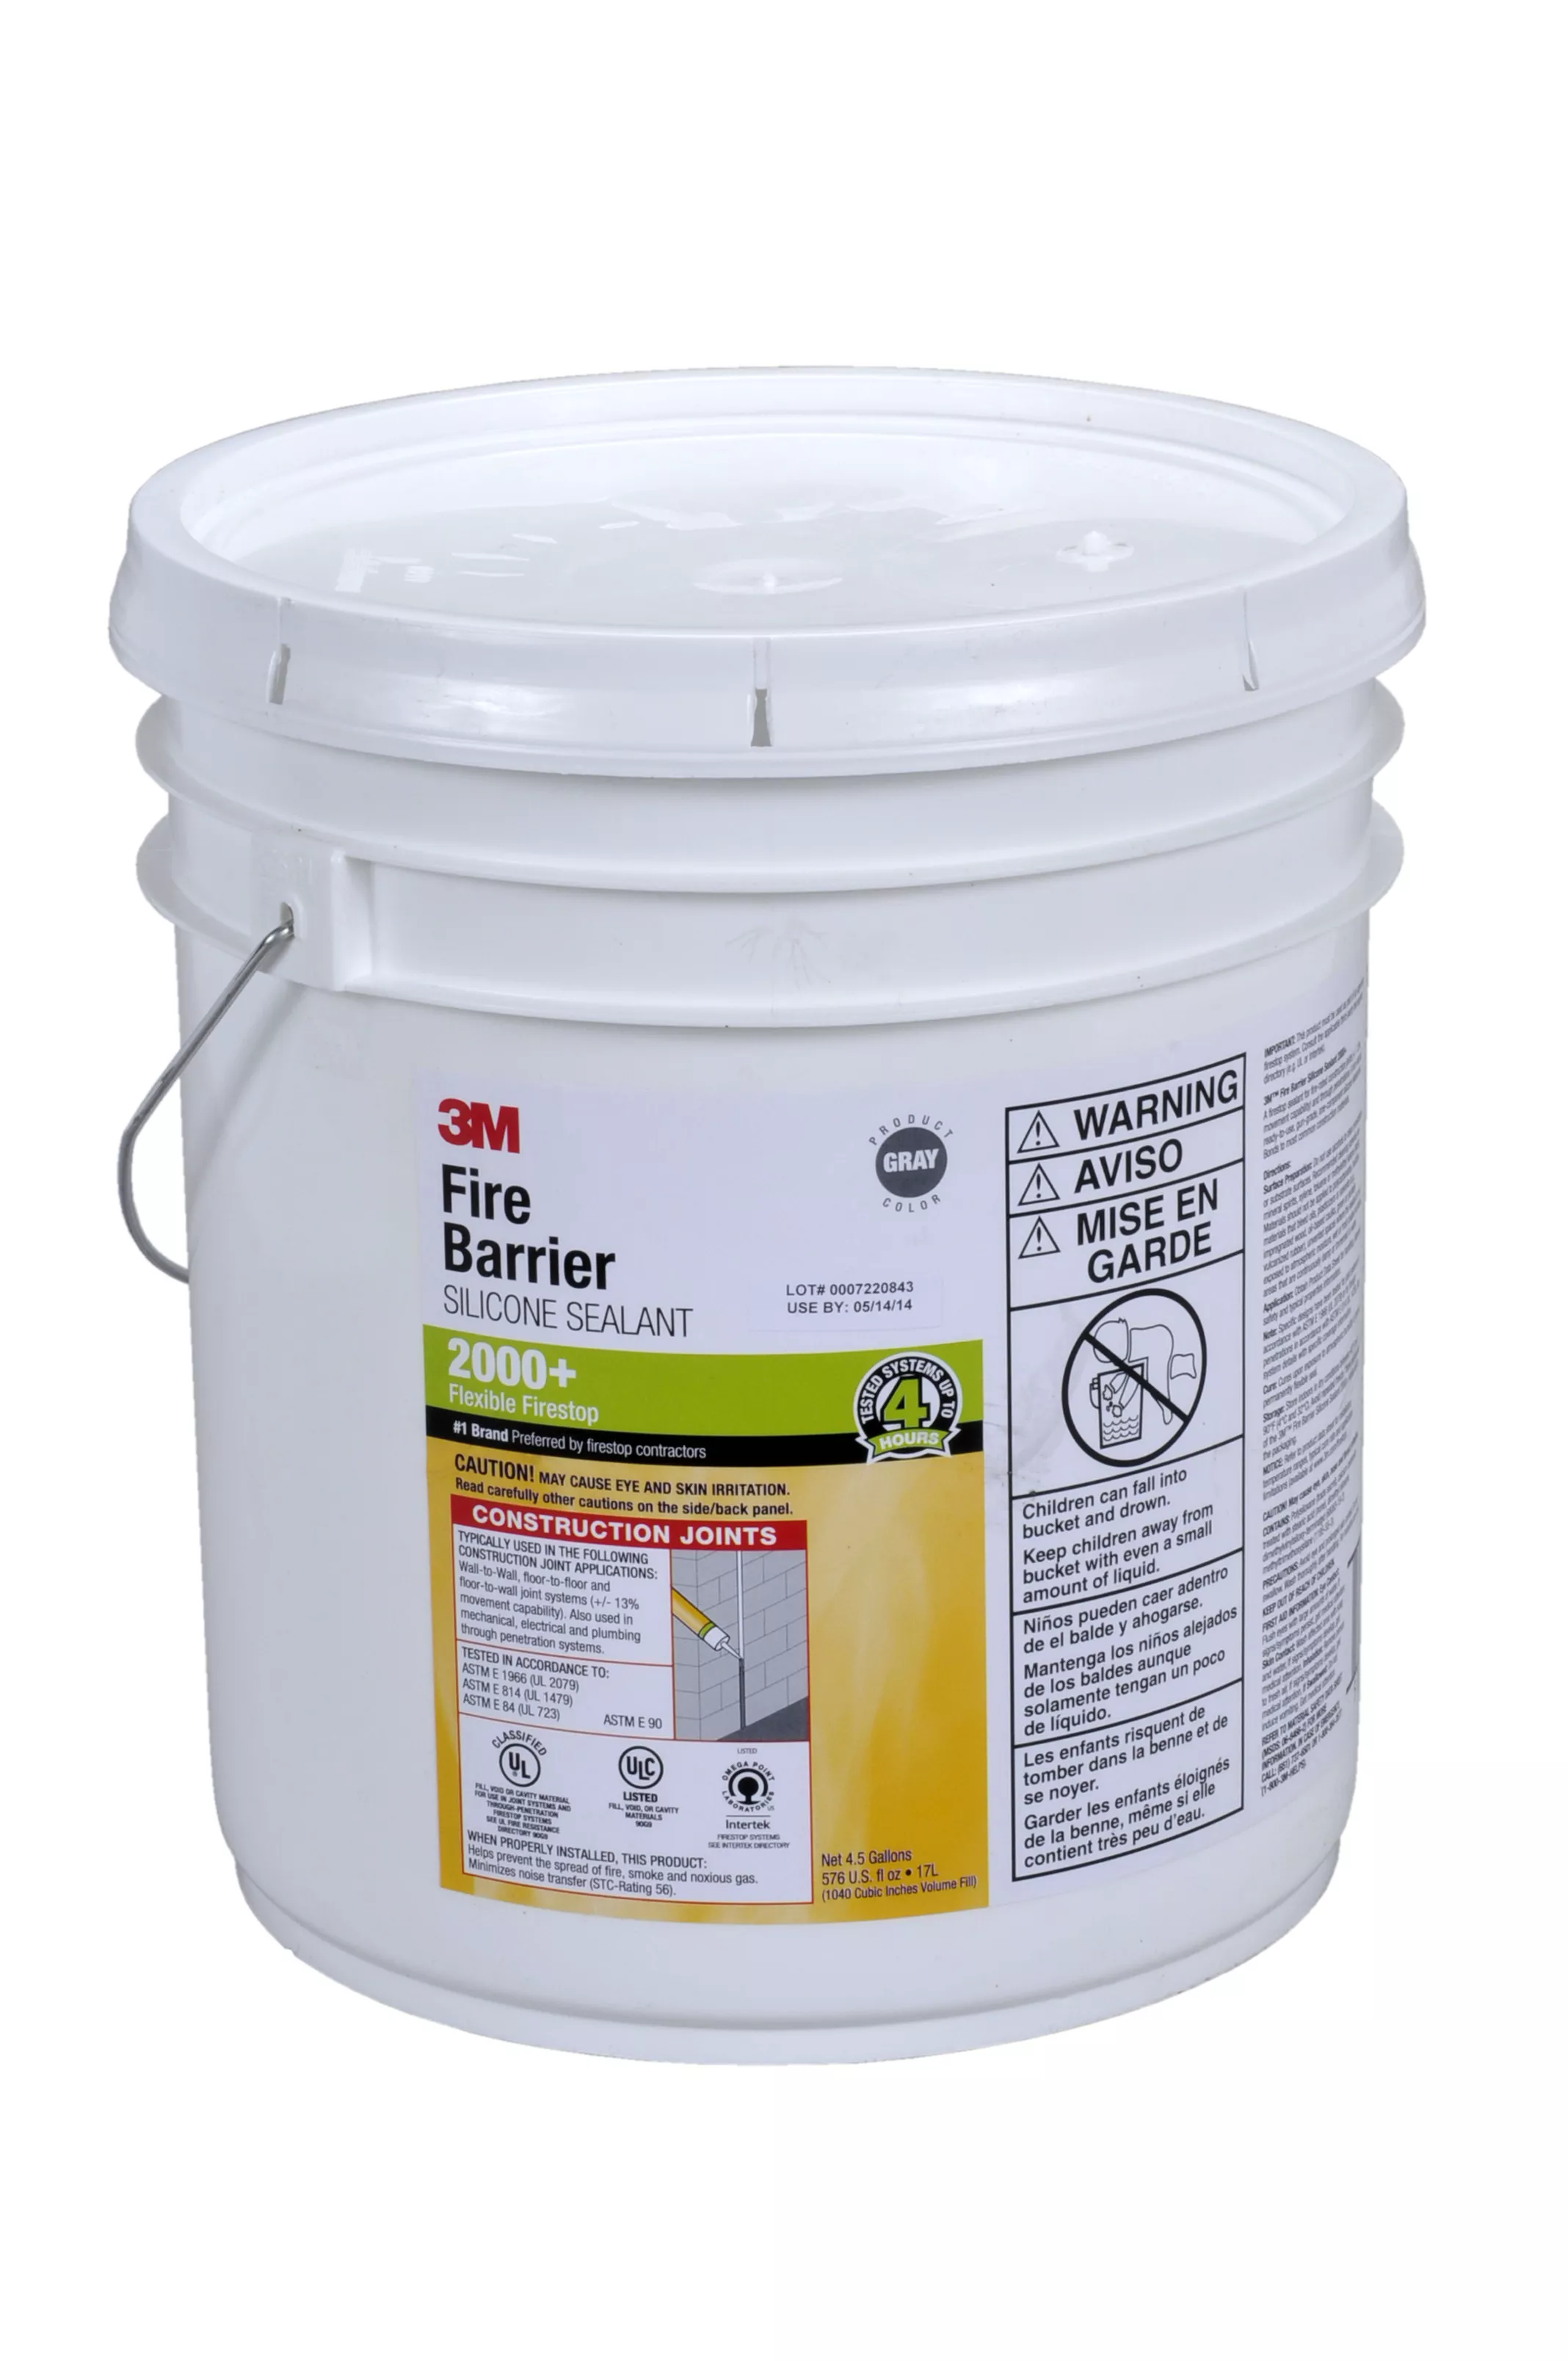 3M™ Fire Barrier Silicone Sealant 2000+, Gray, 4.5 Gallon (Pail), Drum